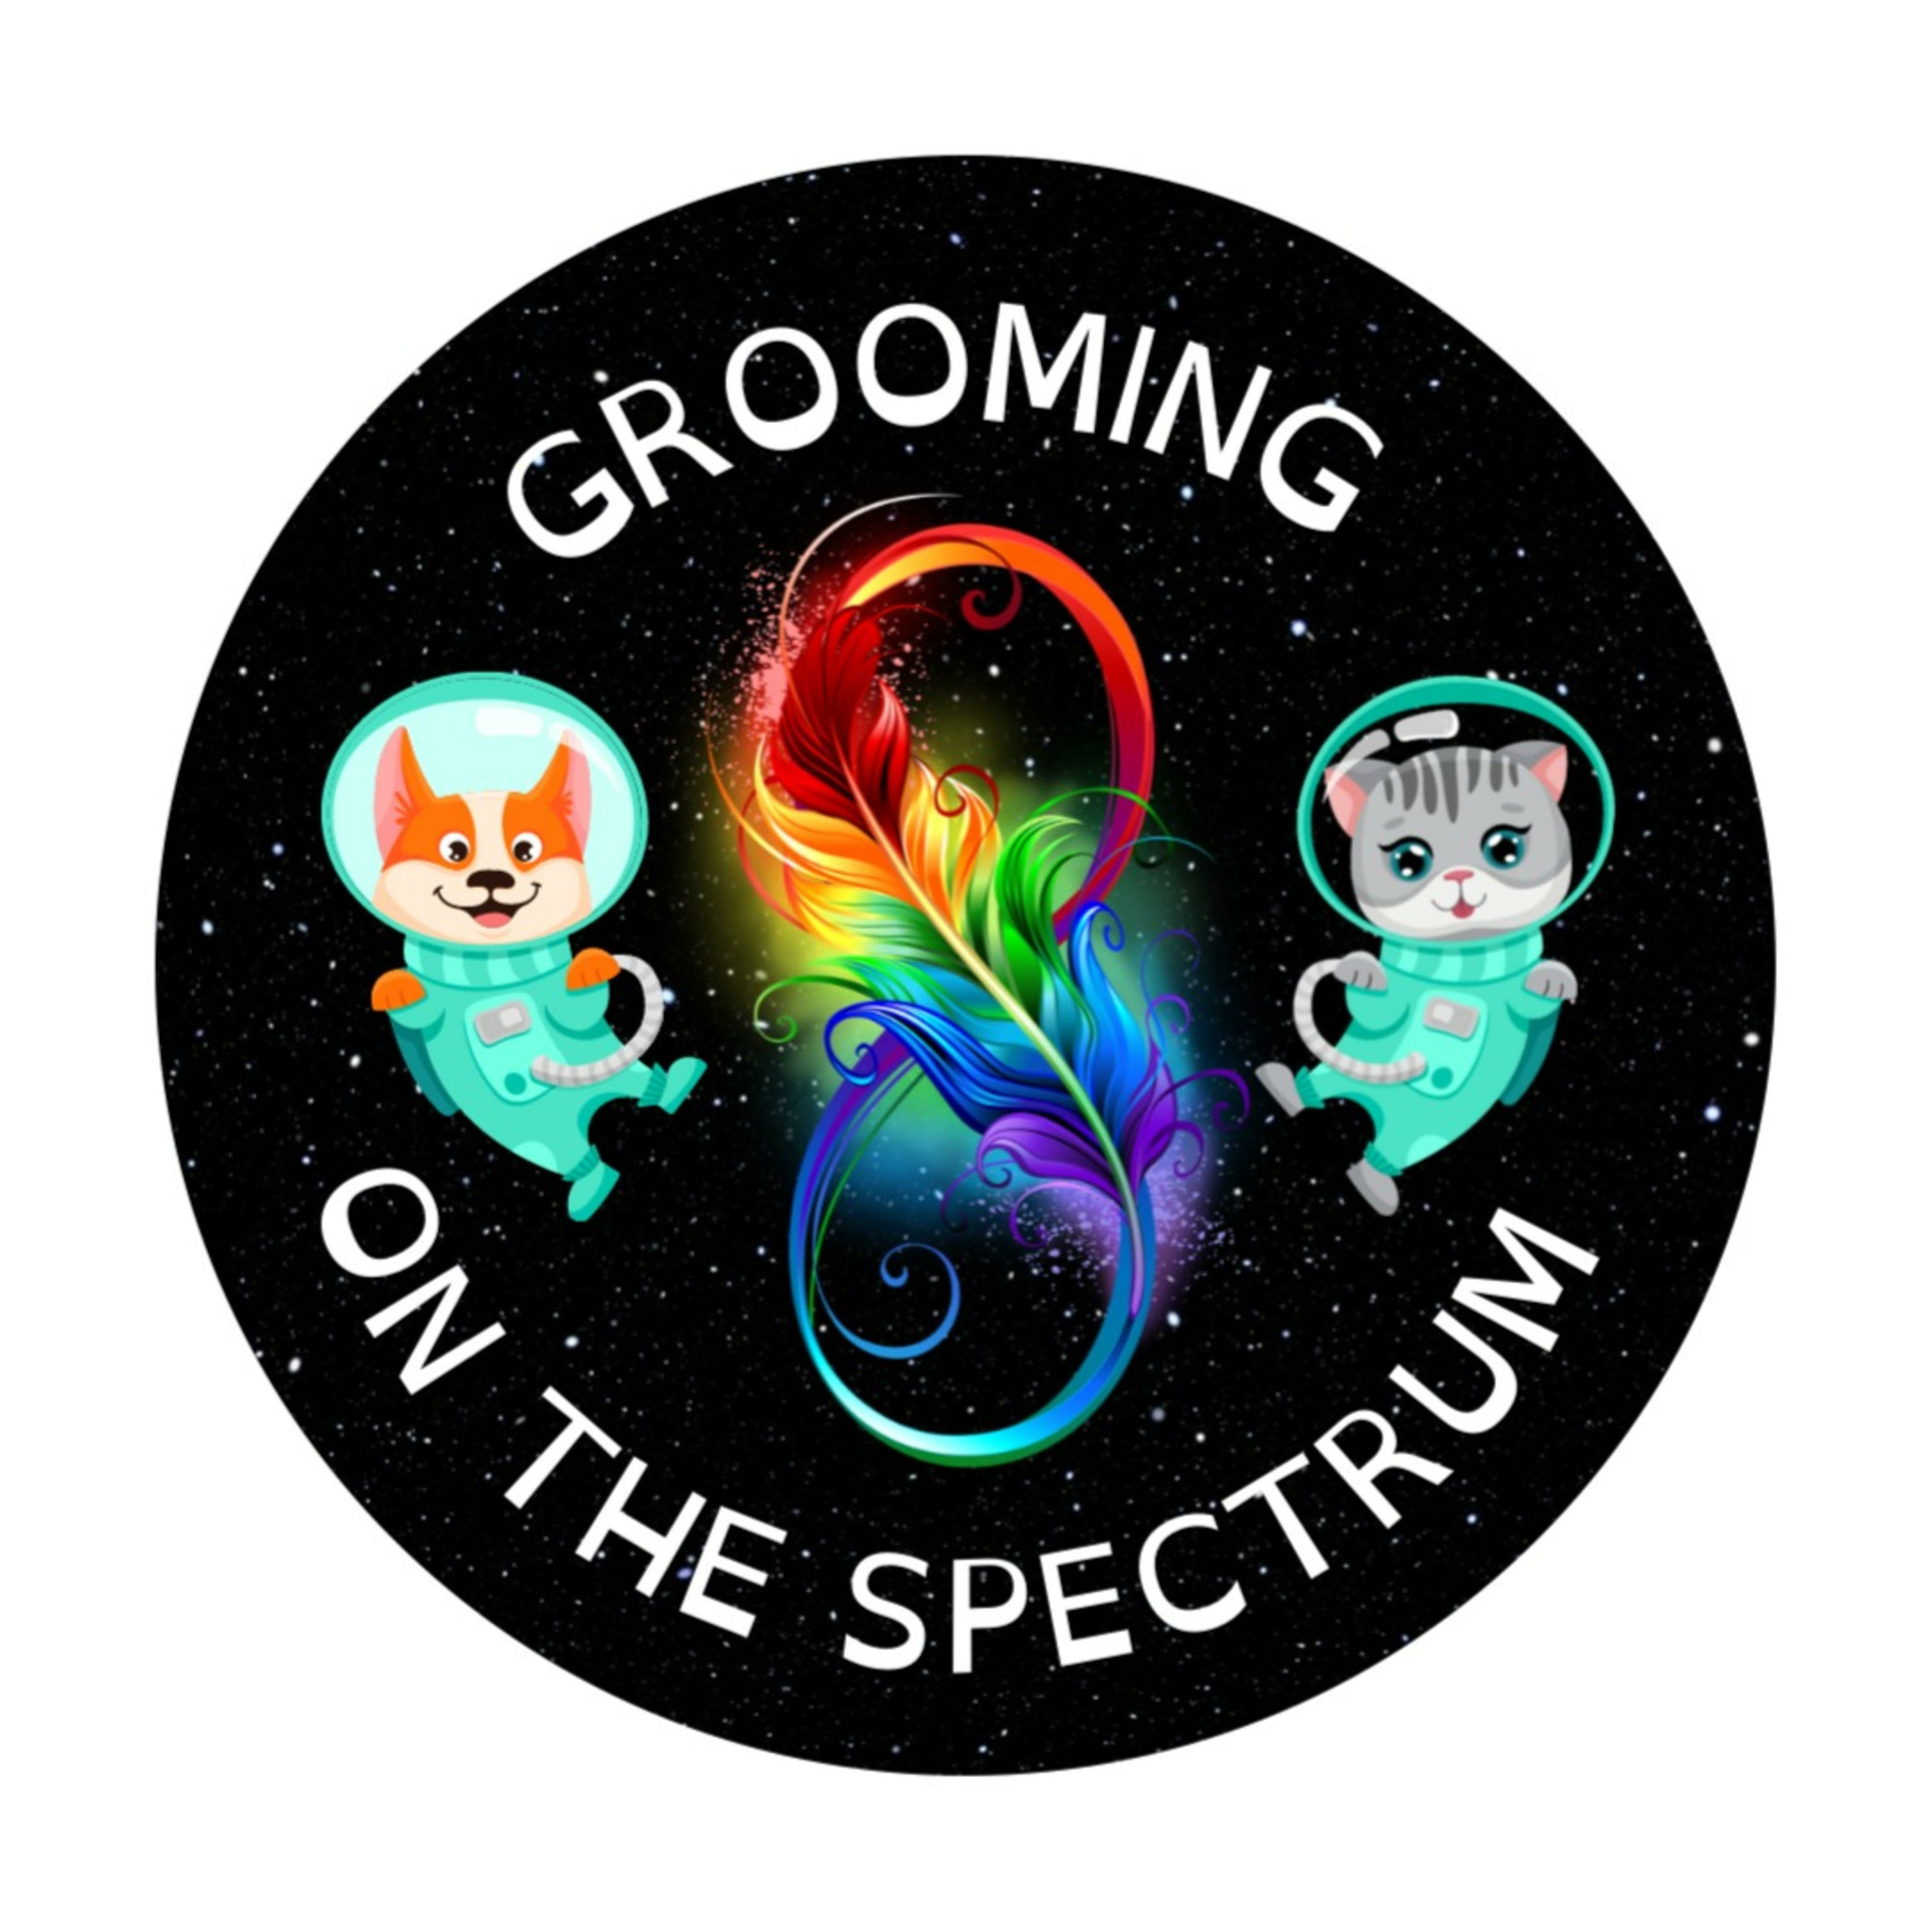 Grooming on the Spectrum